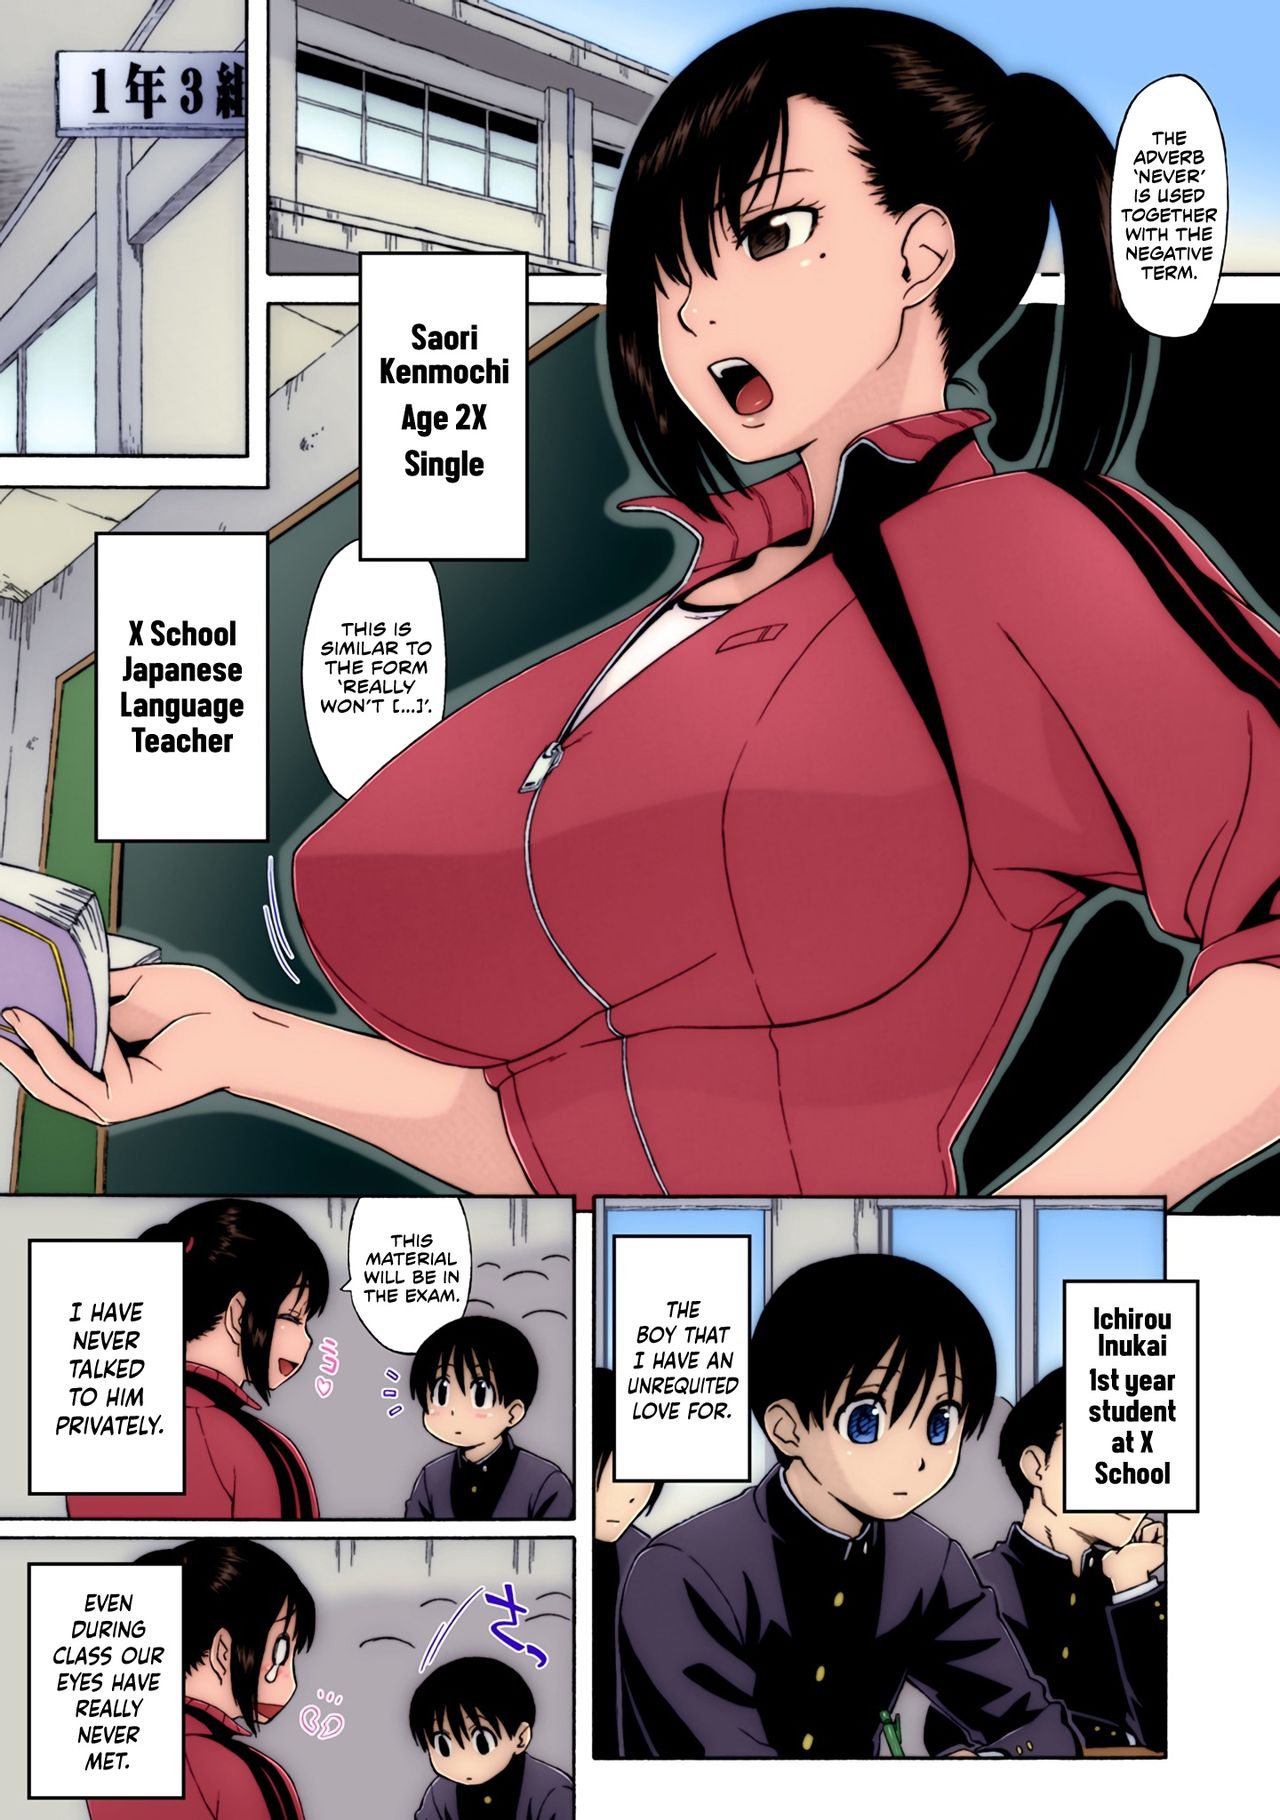 Japanese Cartoon Porn In English - Read Hentai Manga Nonstop! Kenmochi-sensei - Hentai4free